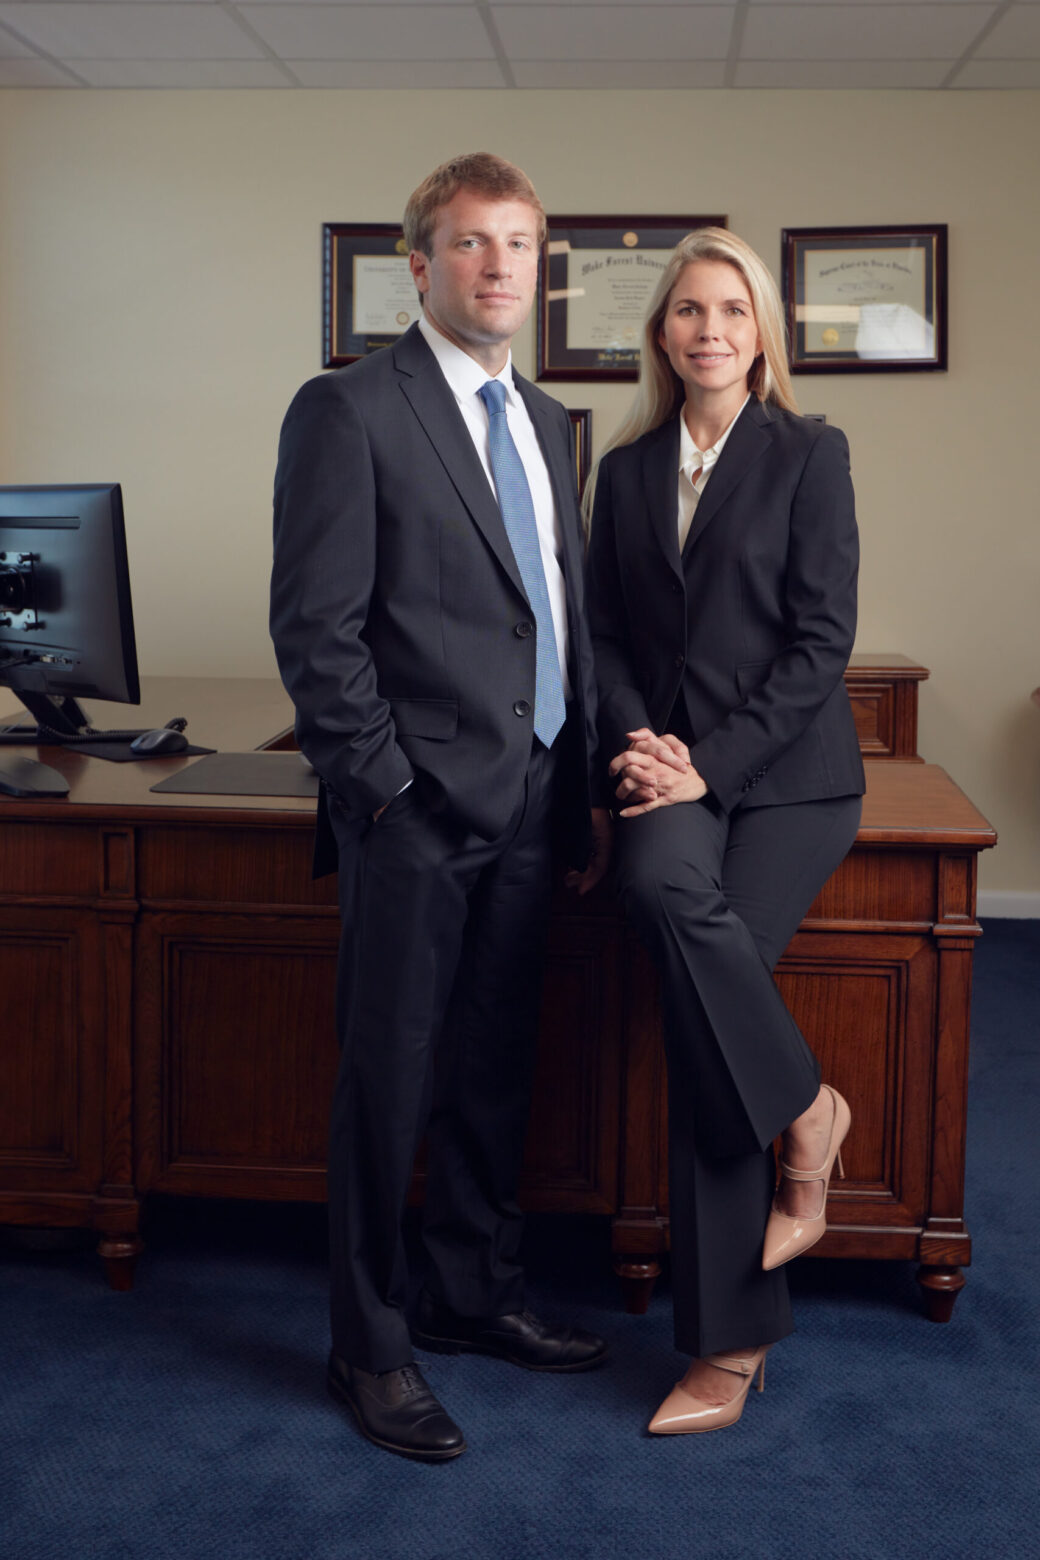 Personal Injury Attorneys - Jordan R. Wagner and Barbara Kibbey